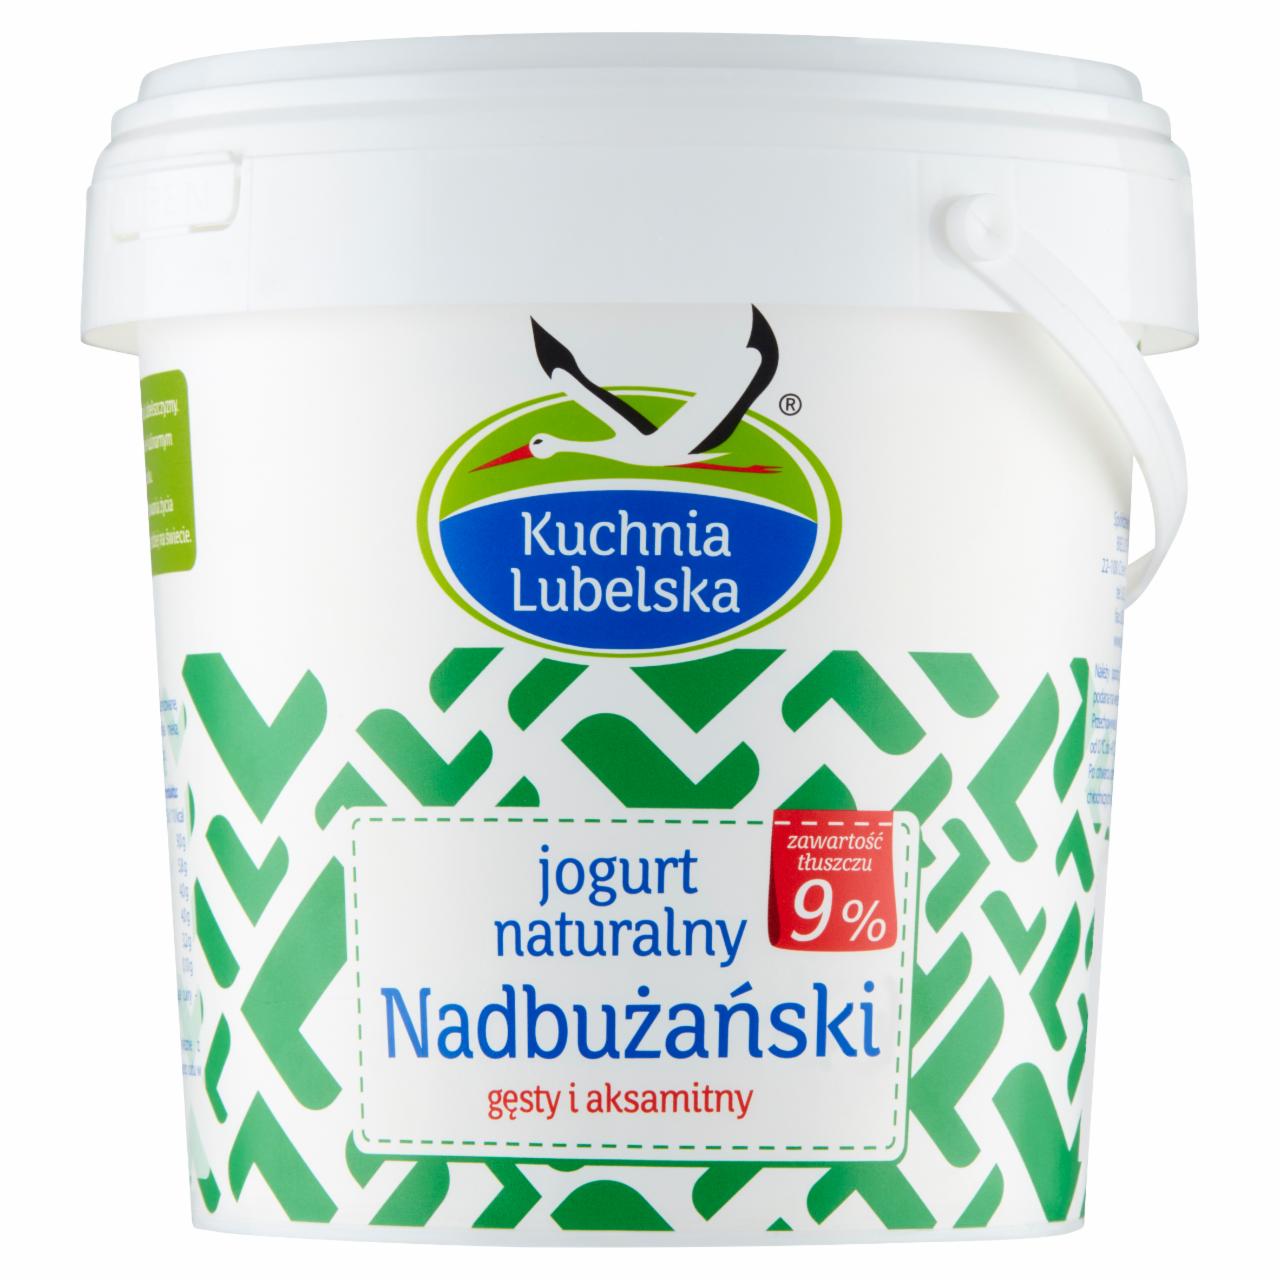 Zdjęcia - Jogurt naturalny nadbużański Kuchnia Lubelska